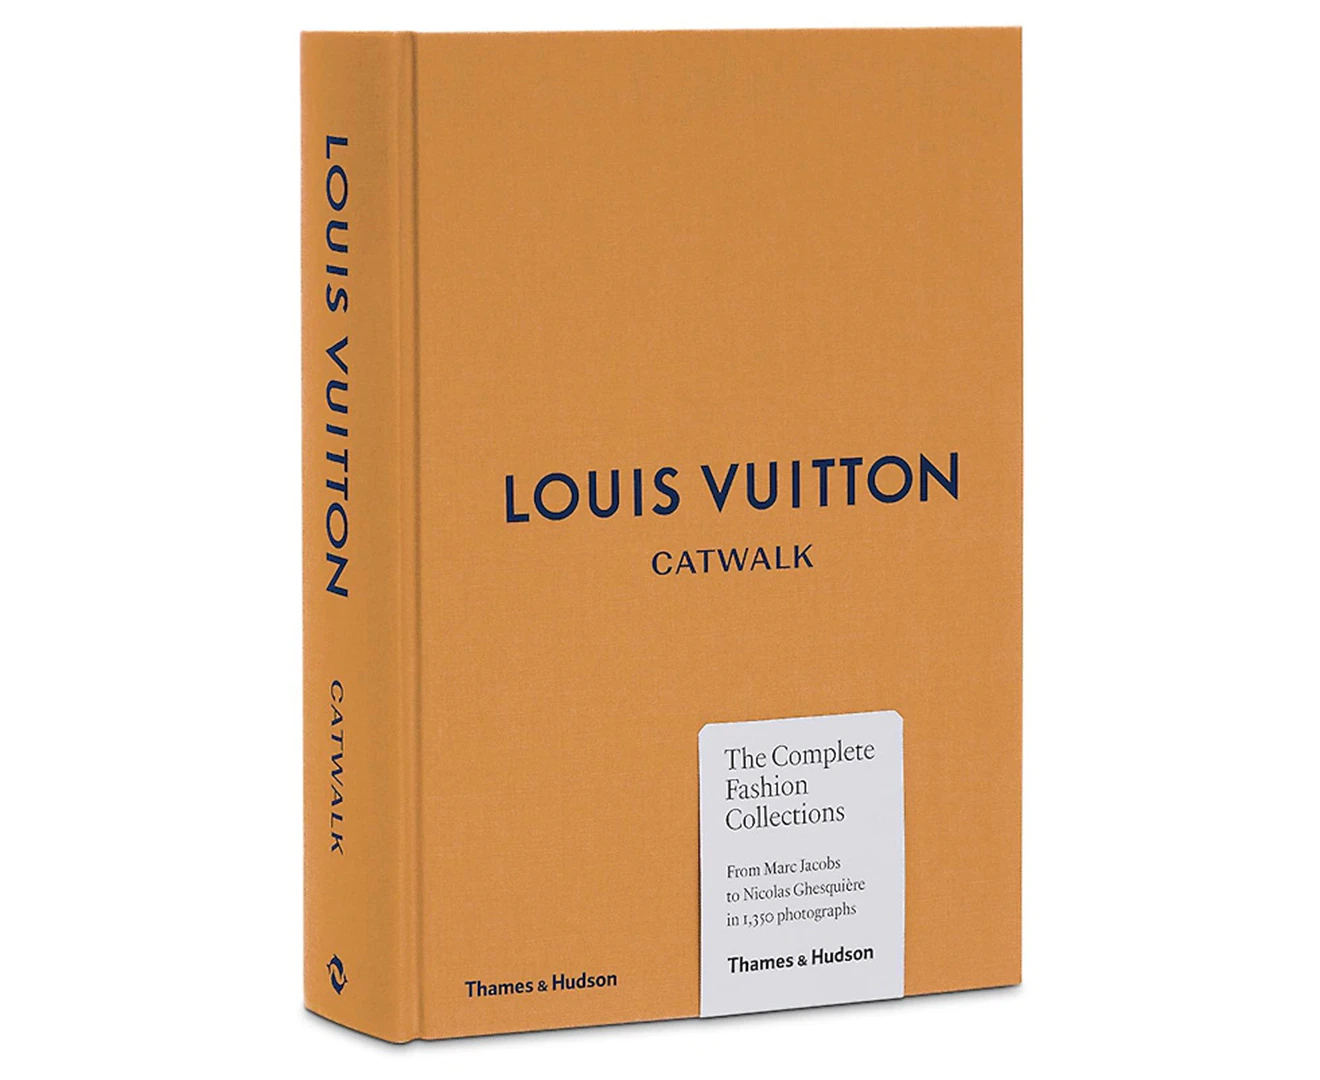 LOUIS VUITTON PASSY BAG- why I won't buy it. 